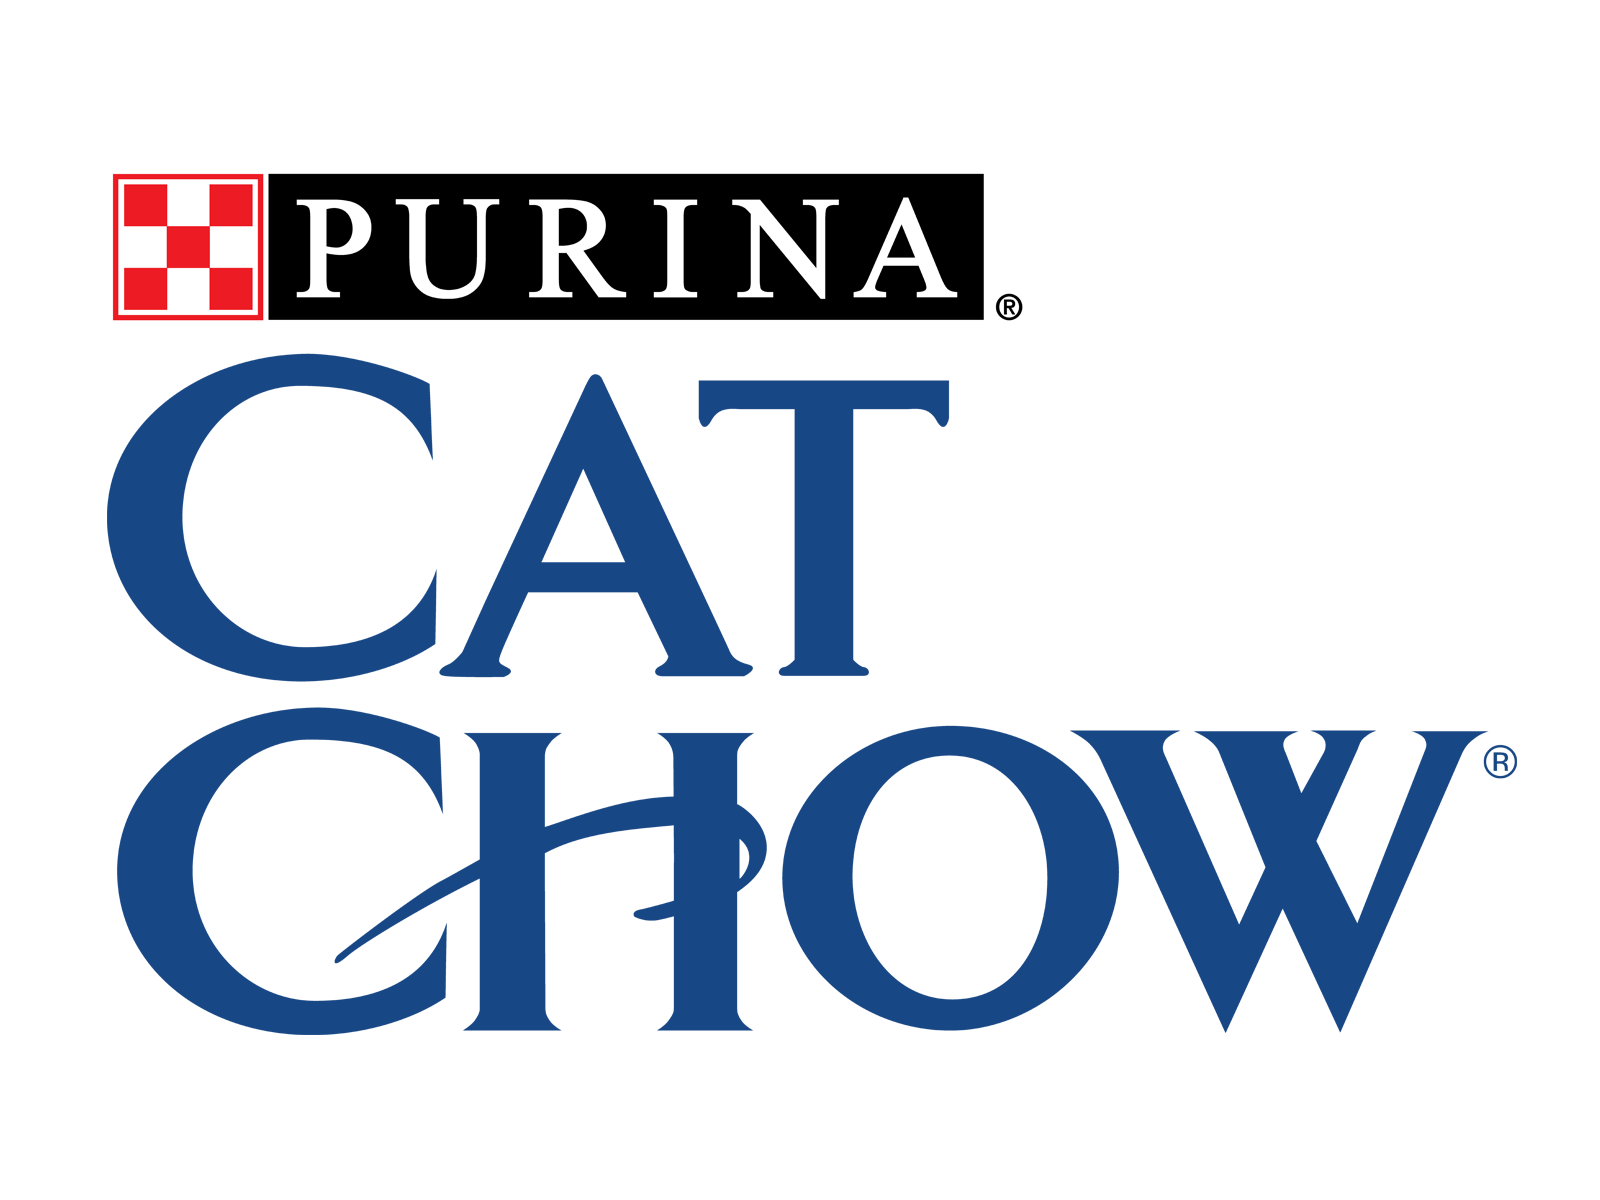 purina-cat-chow